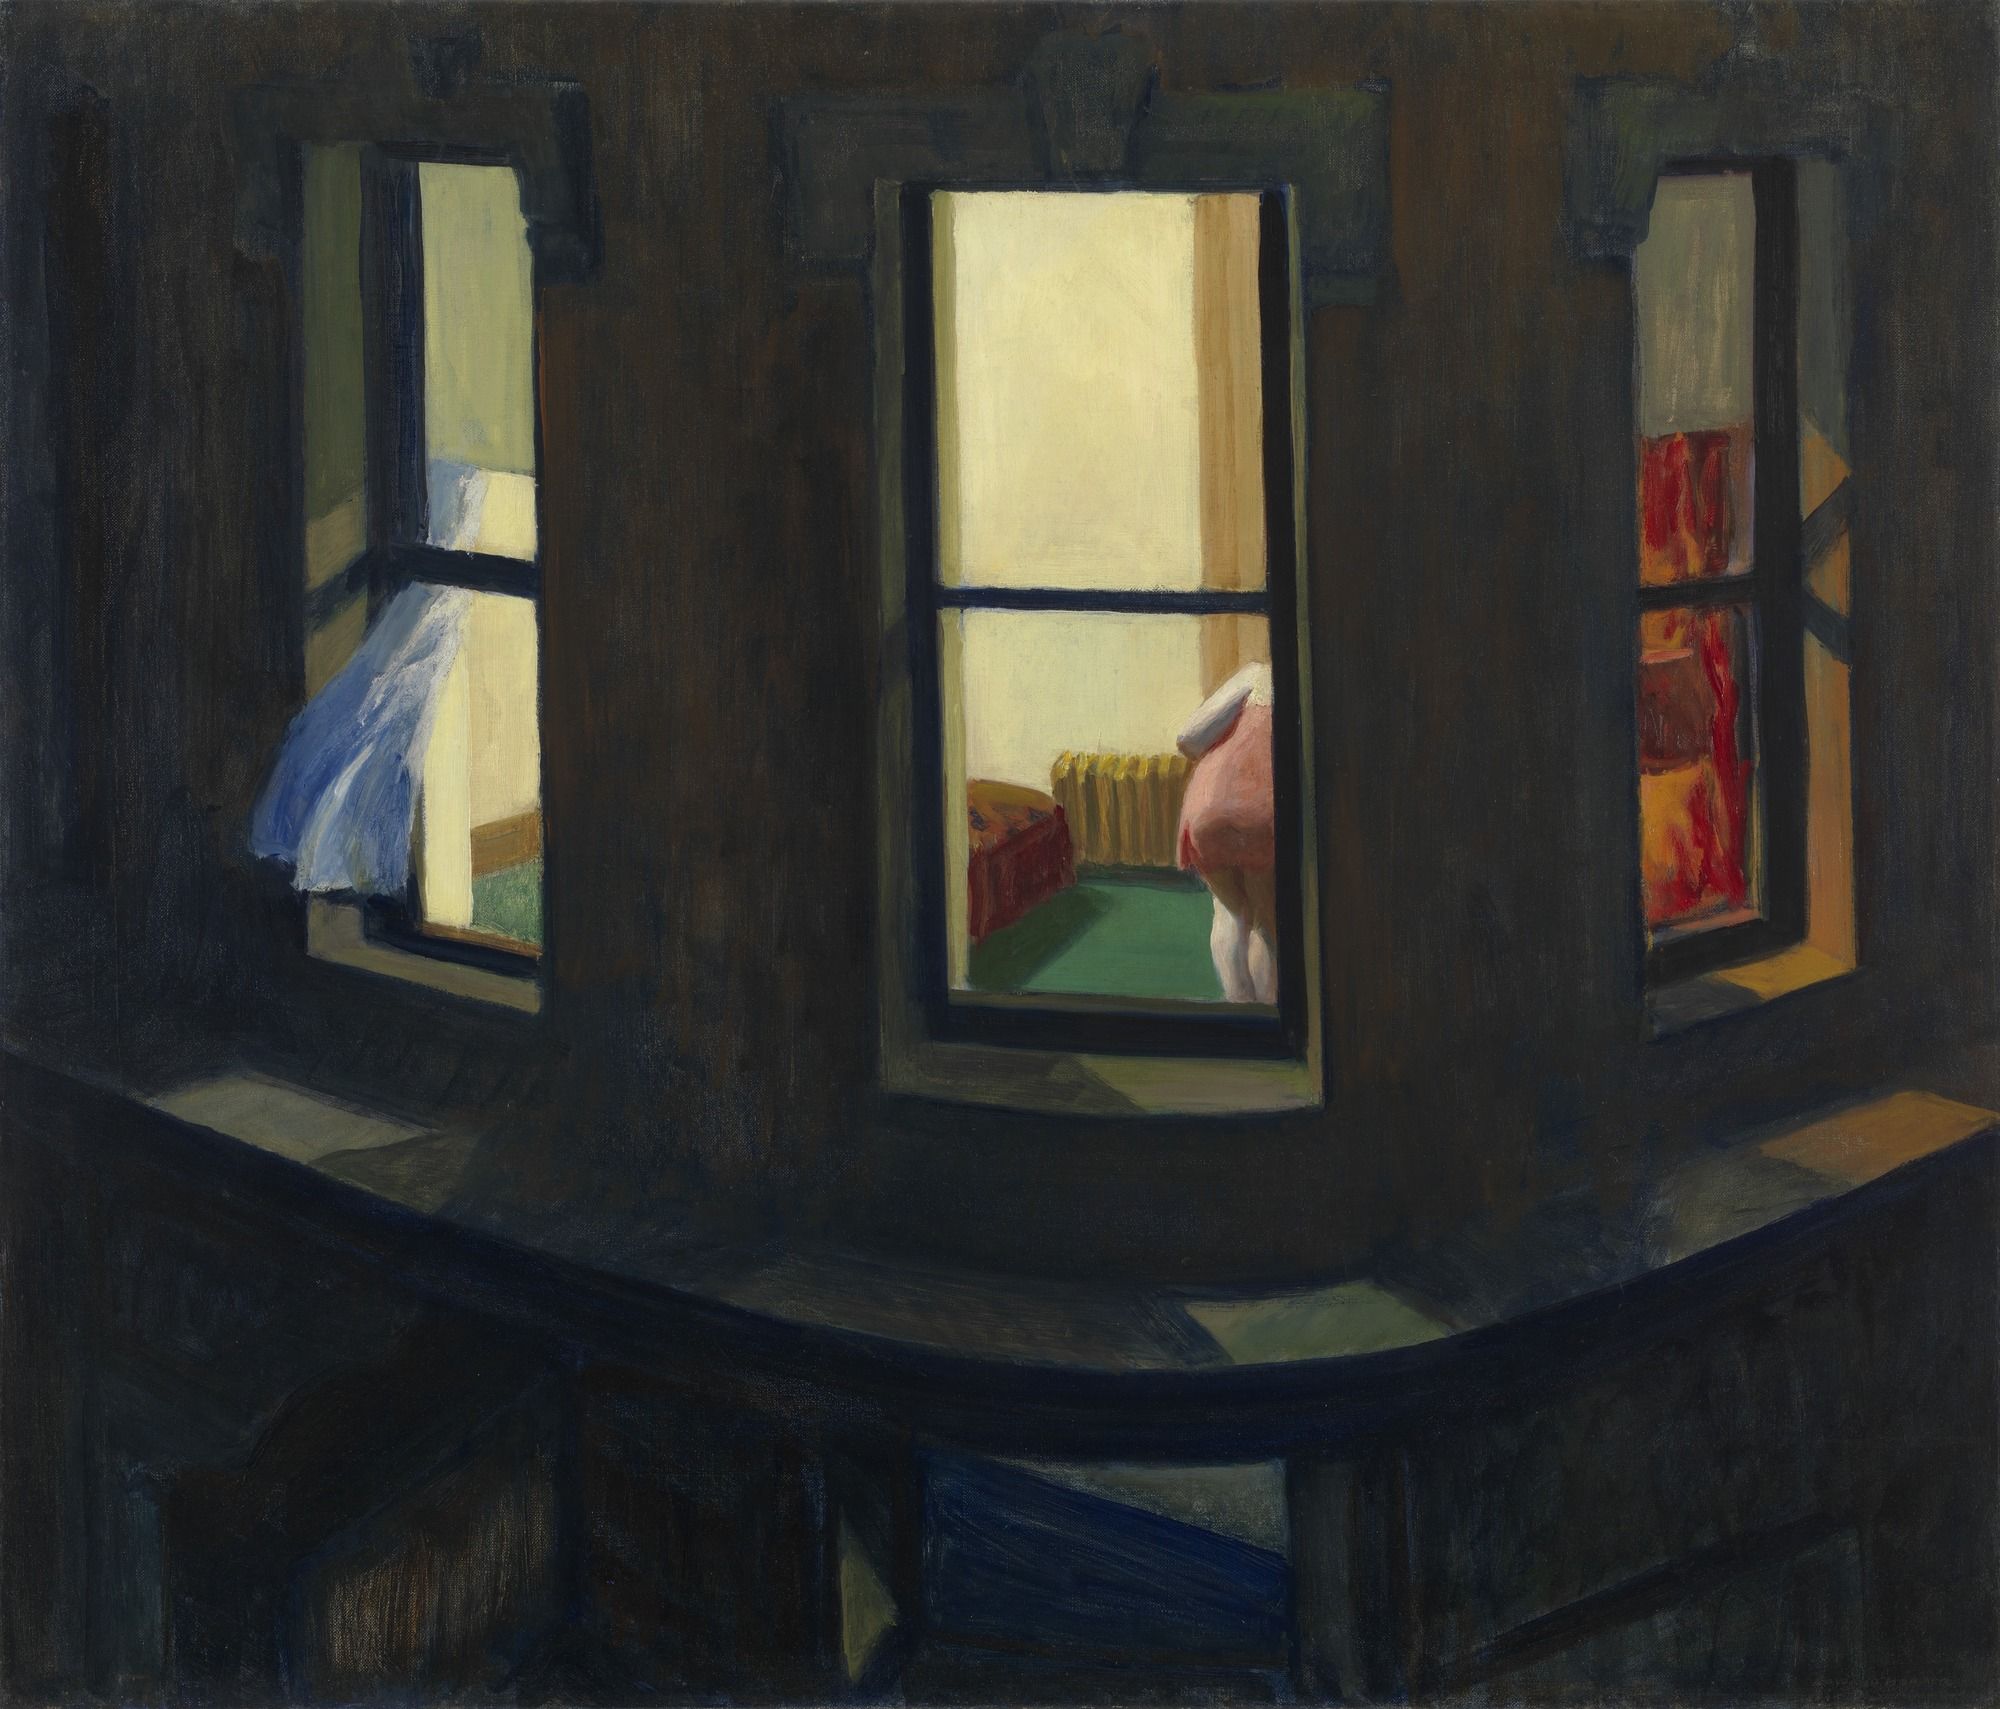 夜の窓 by Edward Hopper - 1928年 - 74 x 86 cm 